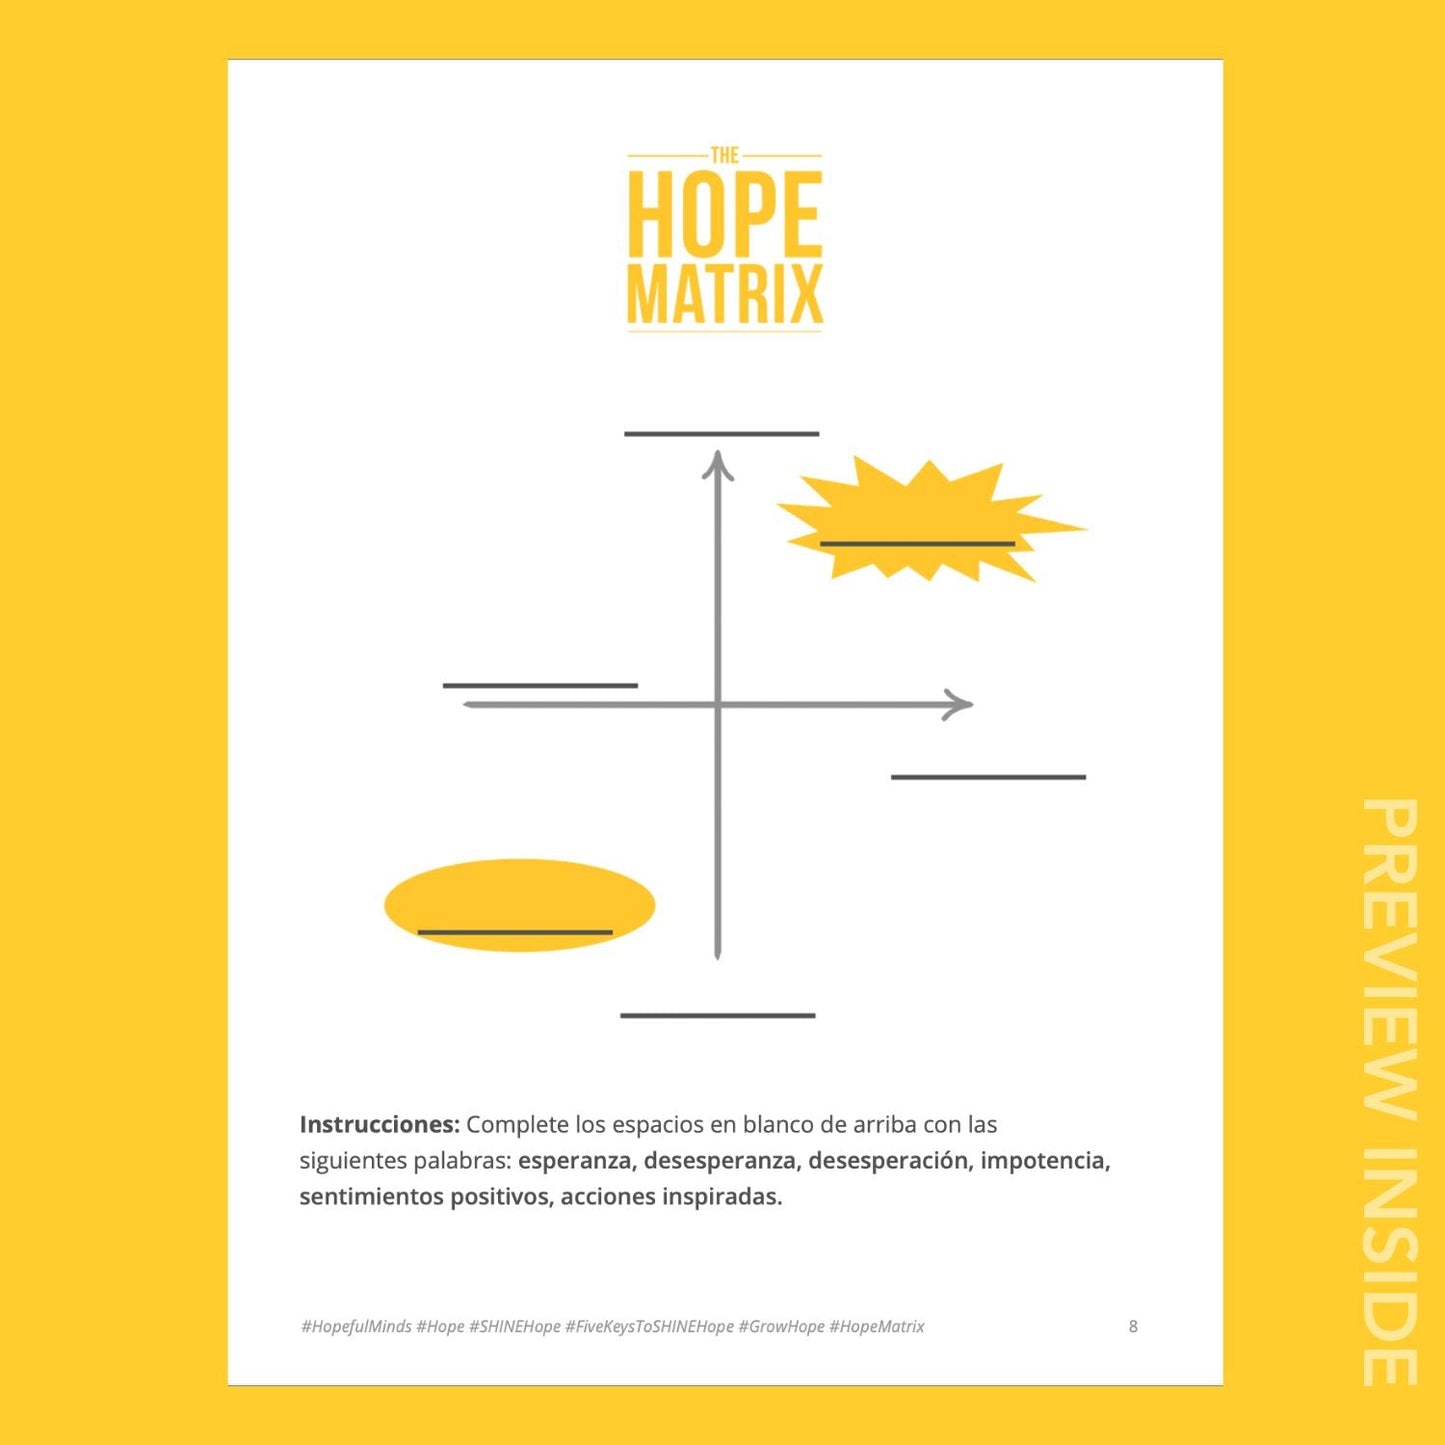 Hopeful Minds Overview Hopework Book - Spanish Edition (Print)